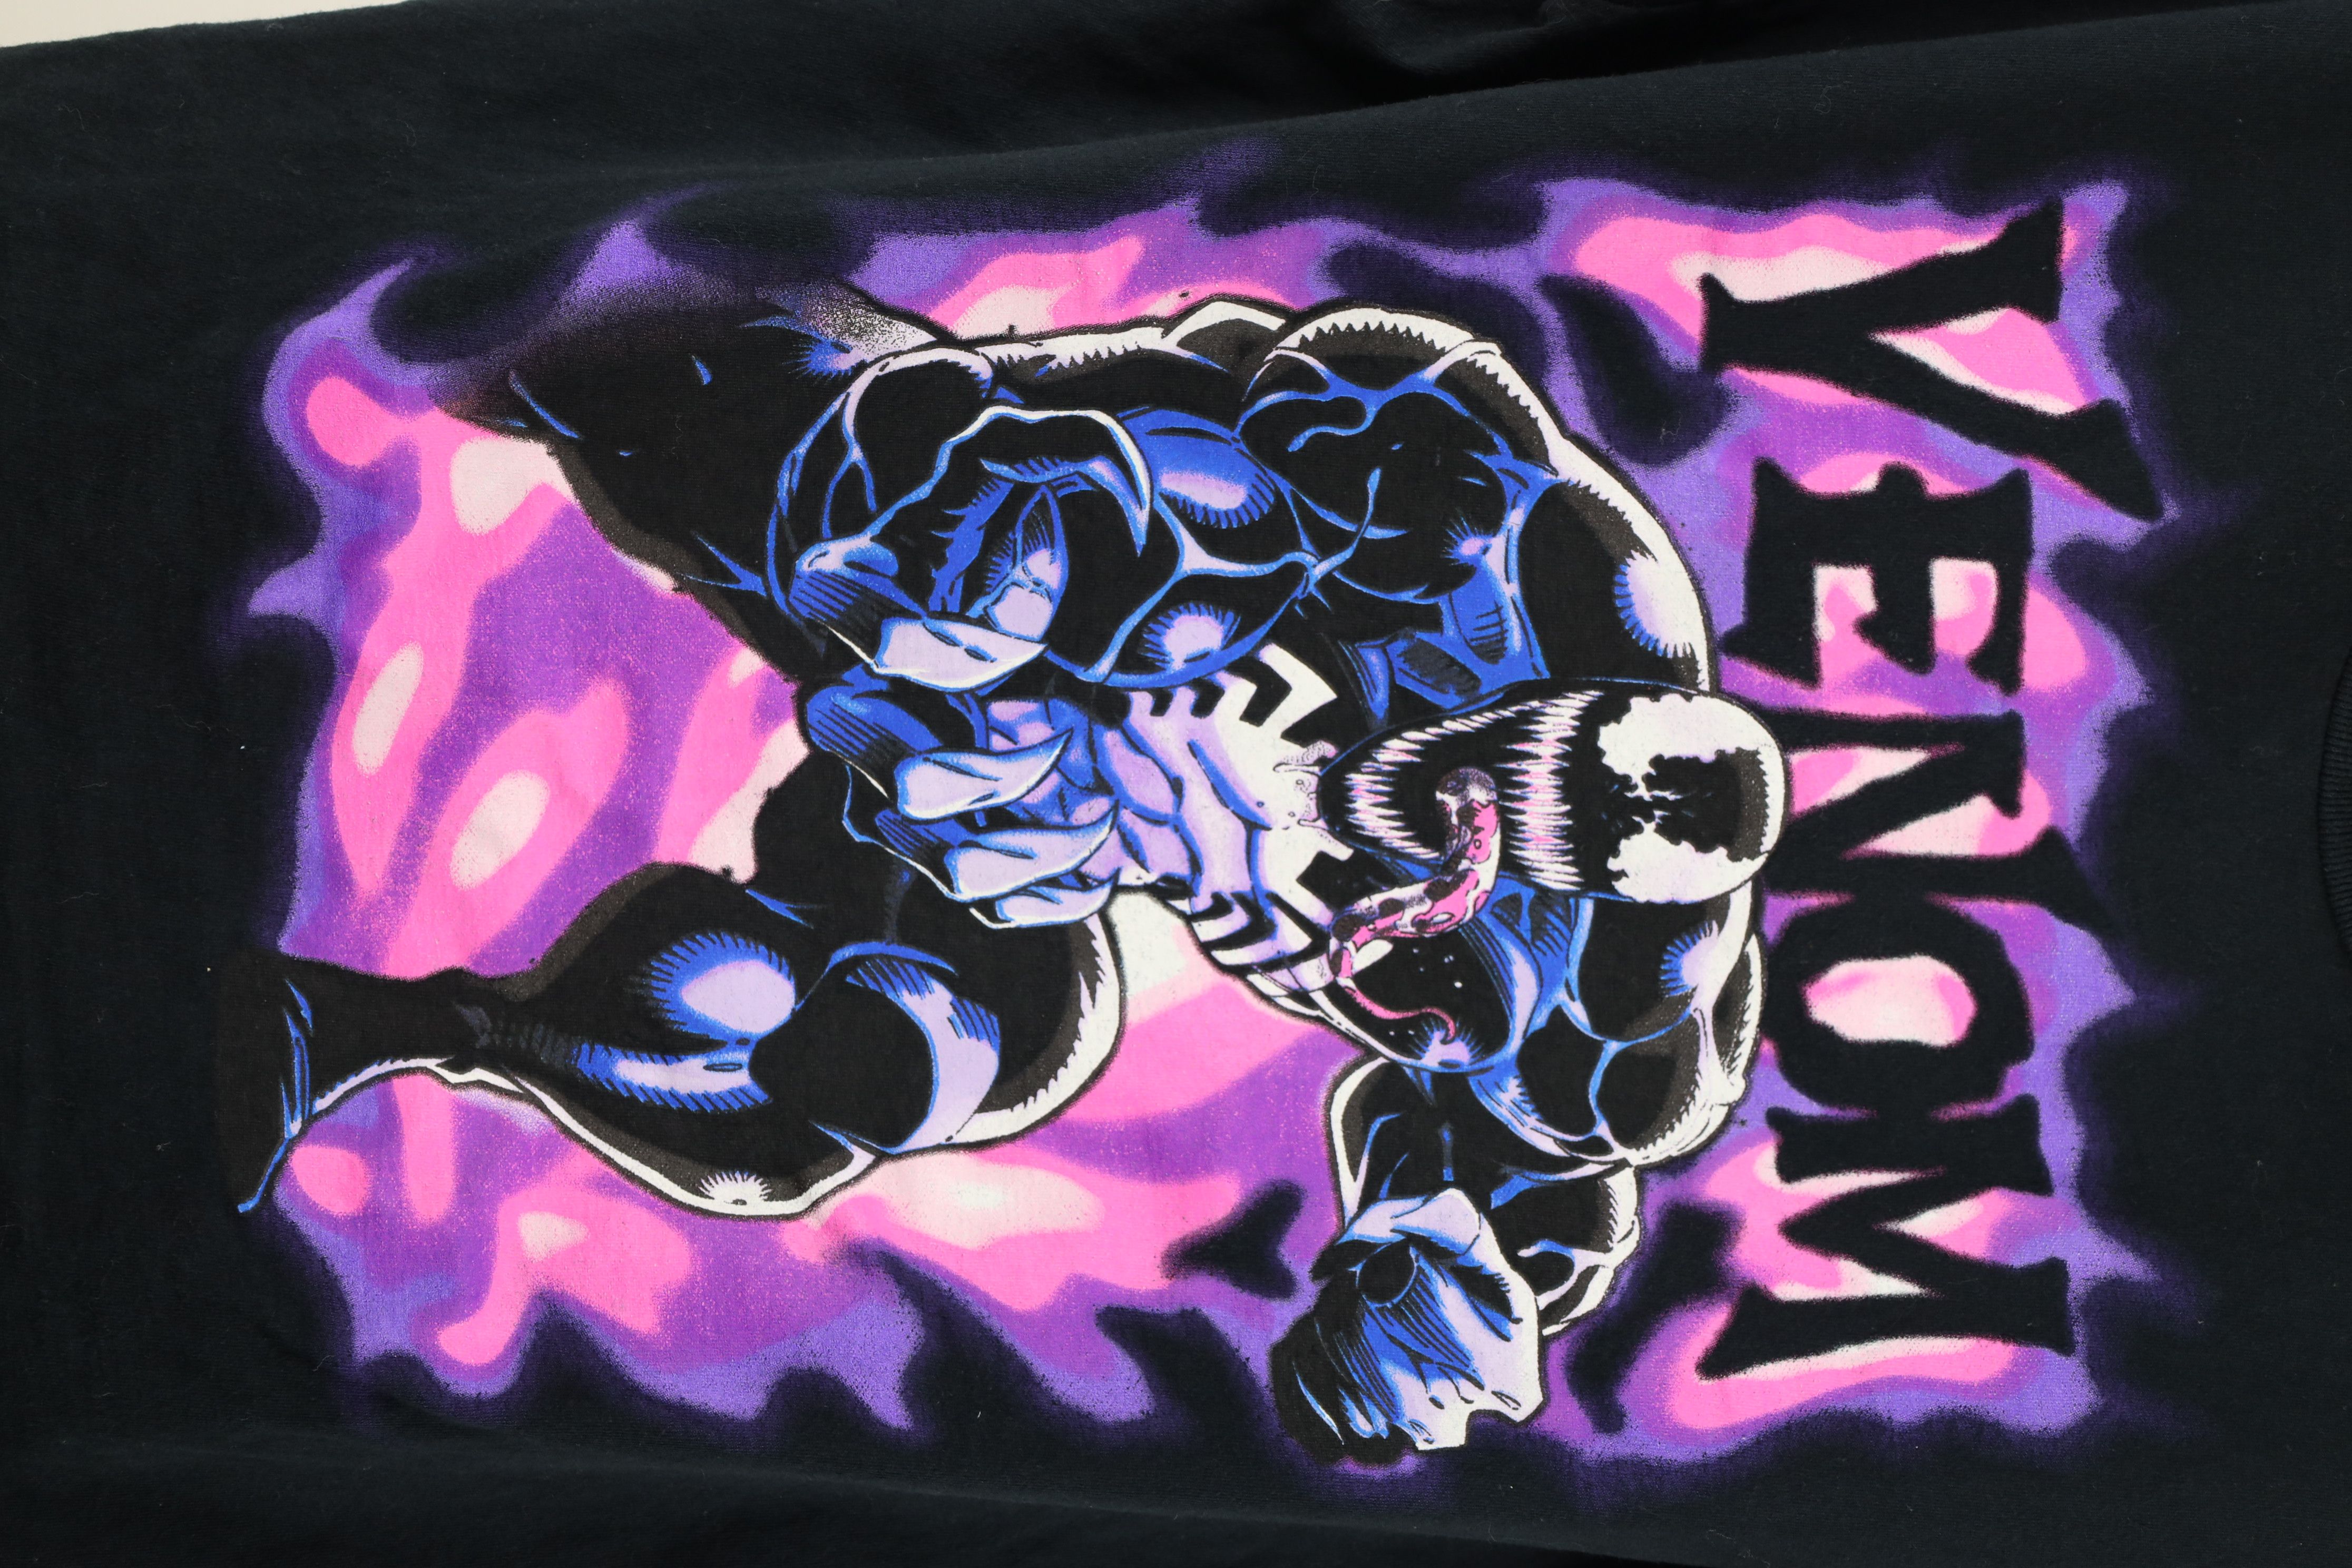 Vintage Marvel Comics Spell Out Venom Spiderman T-Shirt Black Size US M / EU 48-50 / 2 - 4 Thumbnail